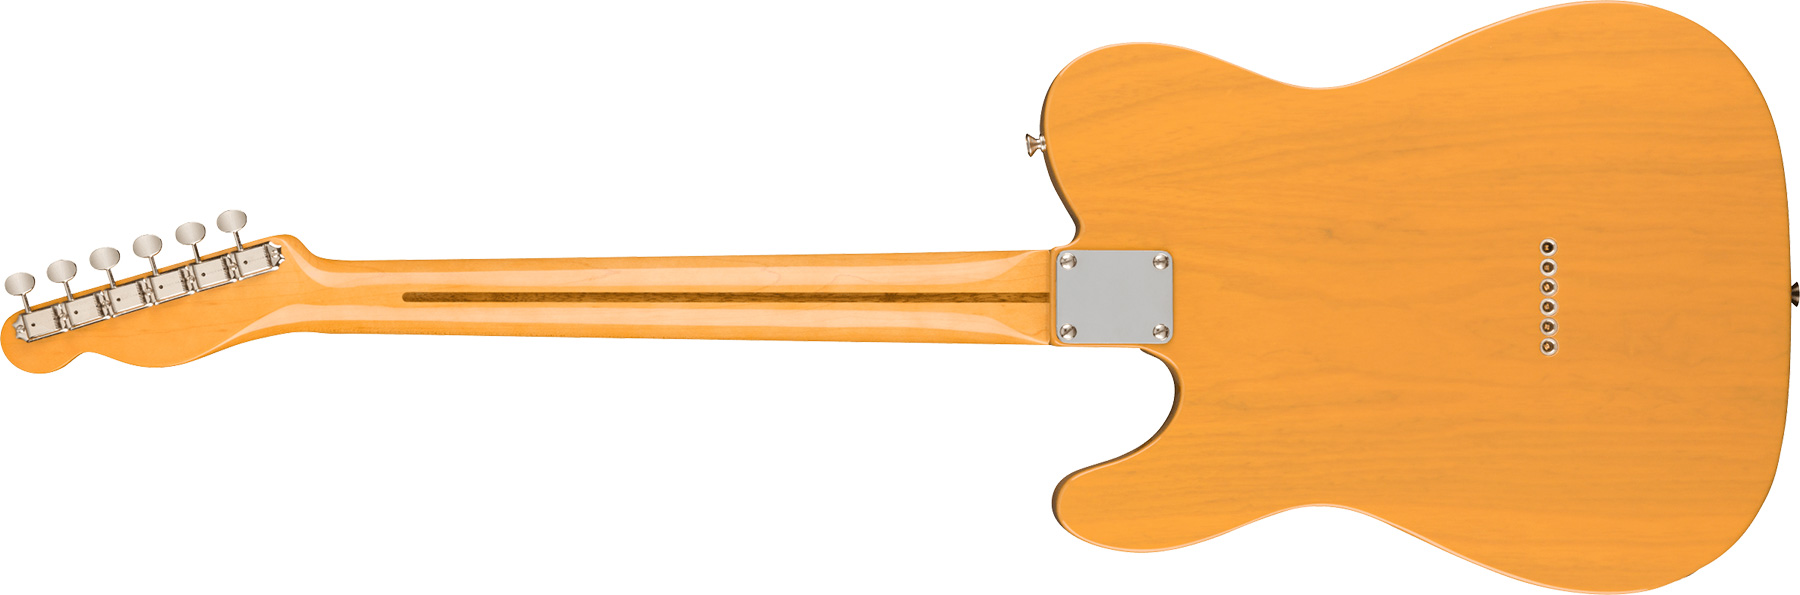 Fender Tele 1951 American Vintage Ii Usa 2s Ht Mn - Butterscotch Blonde - Tel shape electric guitar - Variation 1